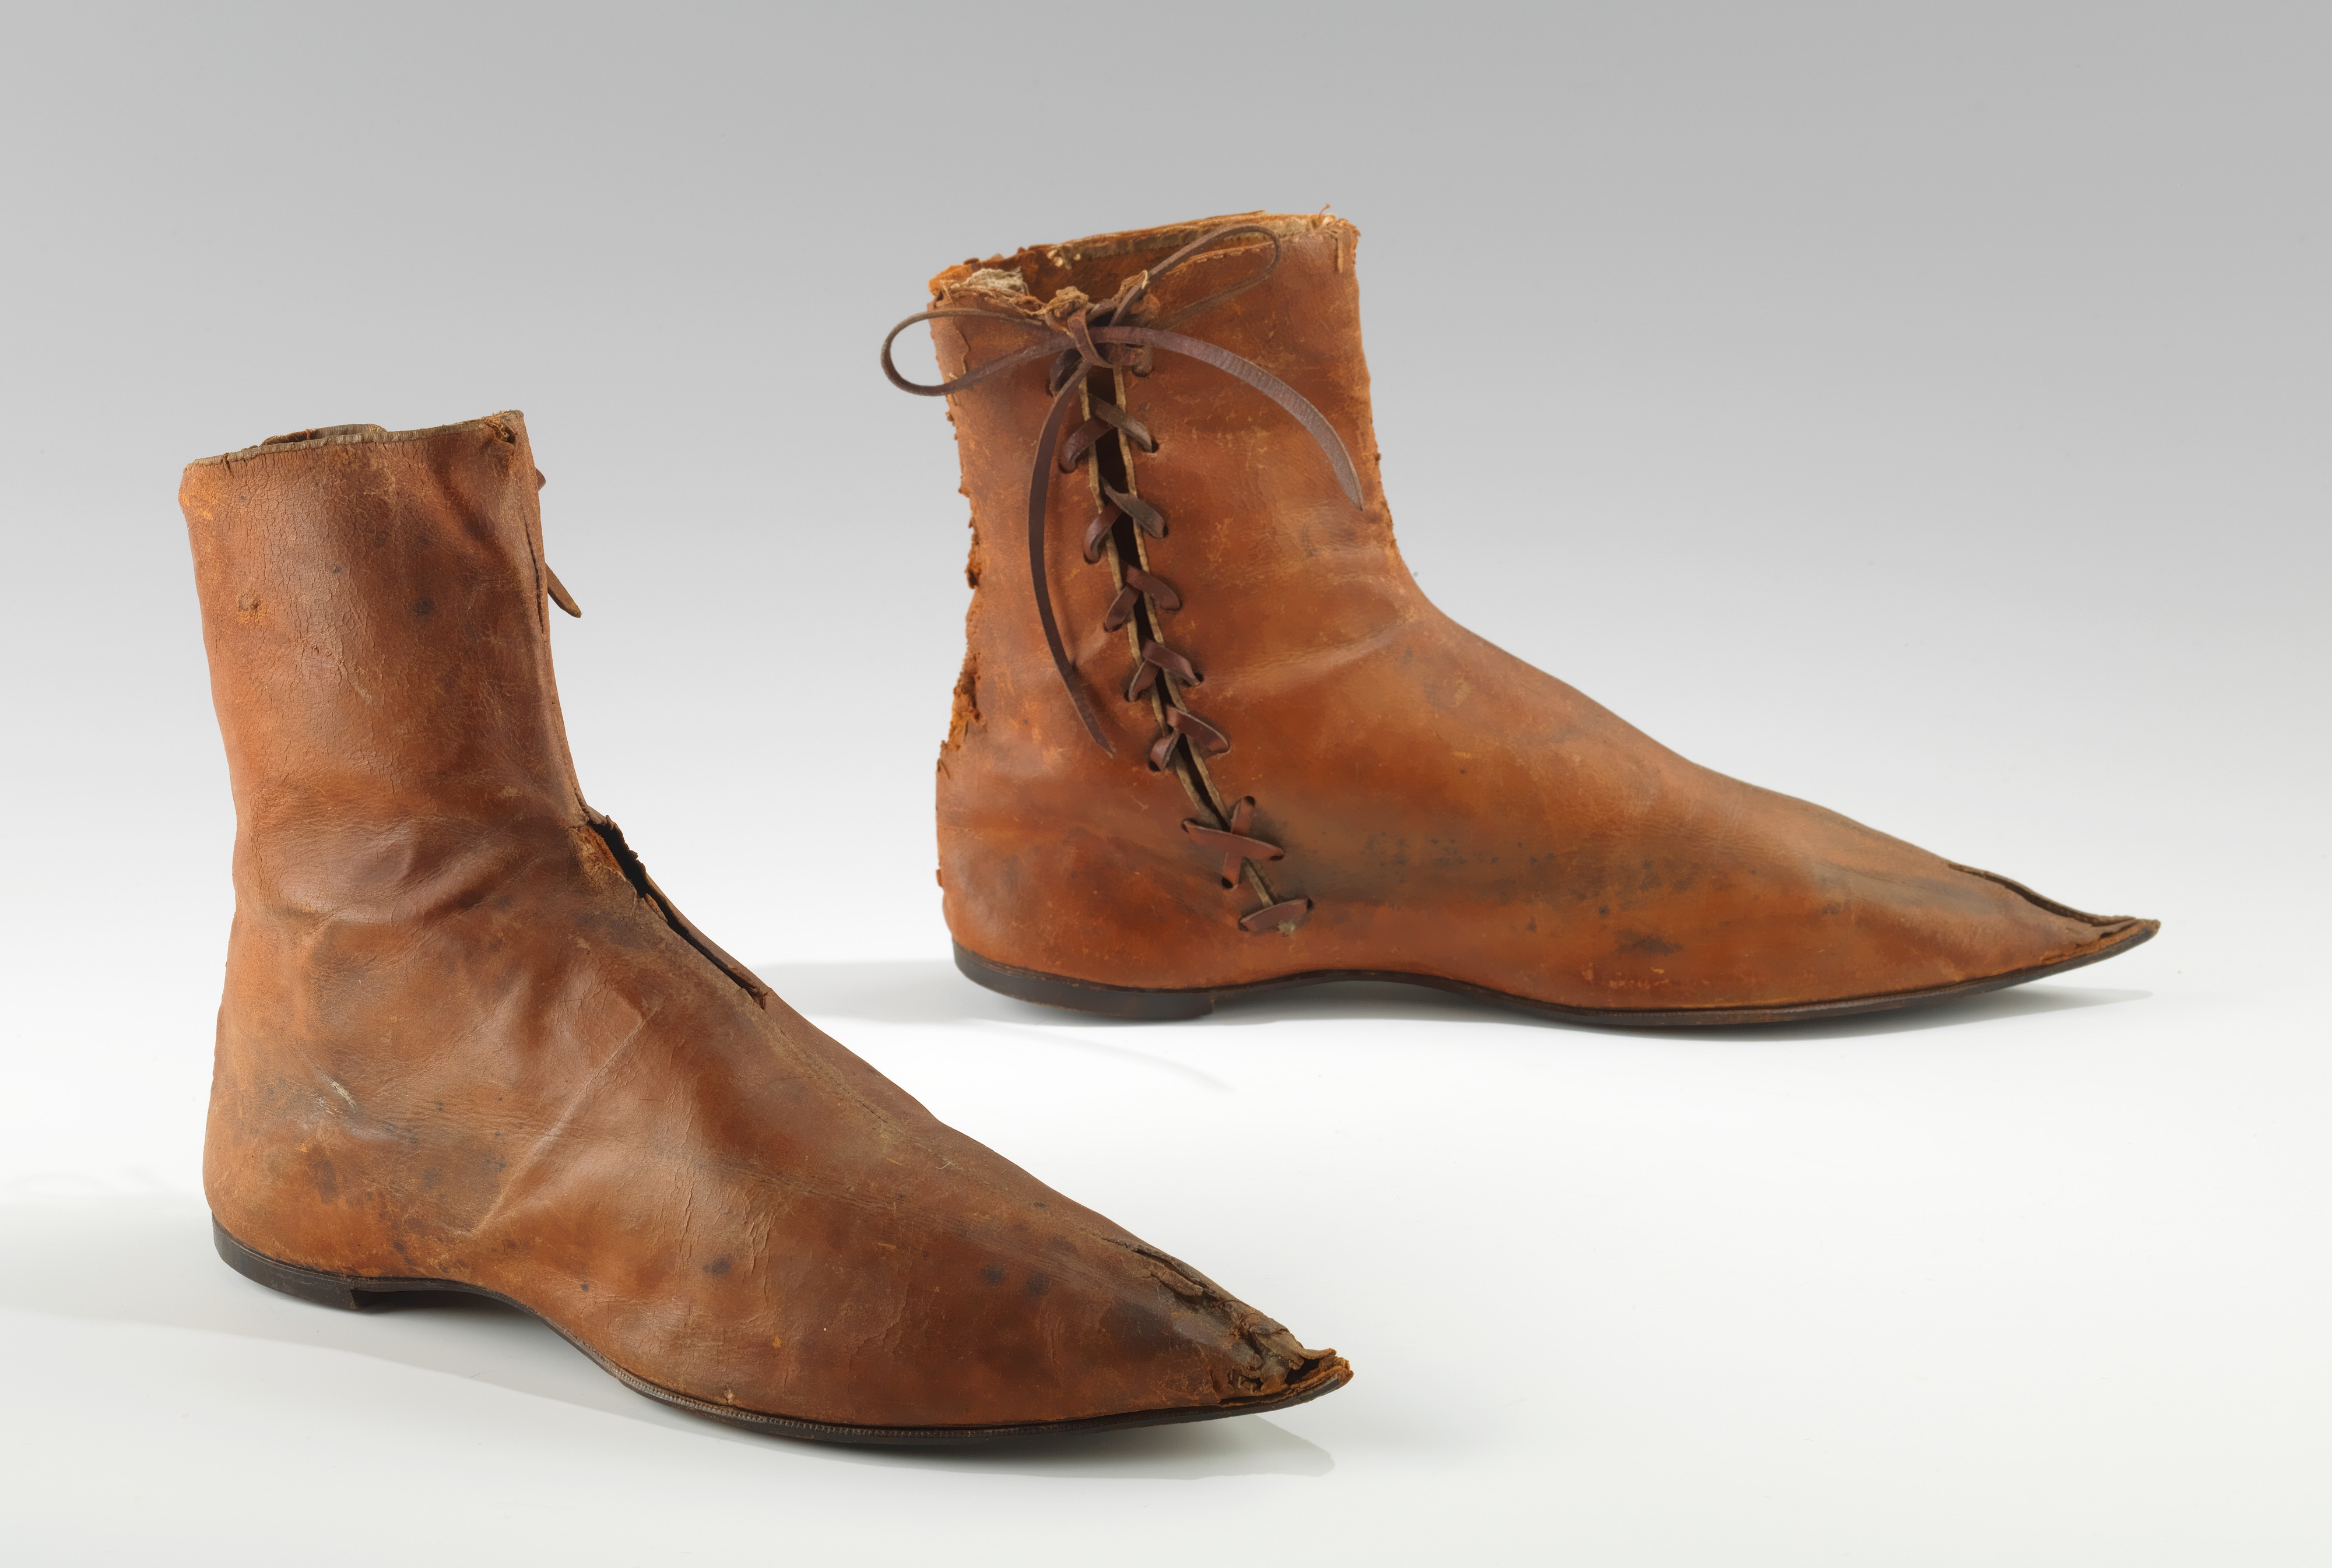 Boots | British | The Metropolitan Museum of Art